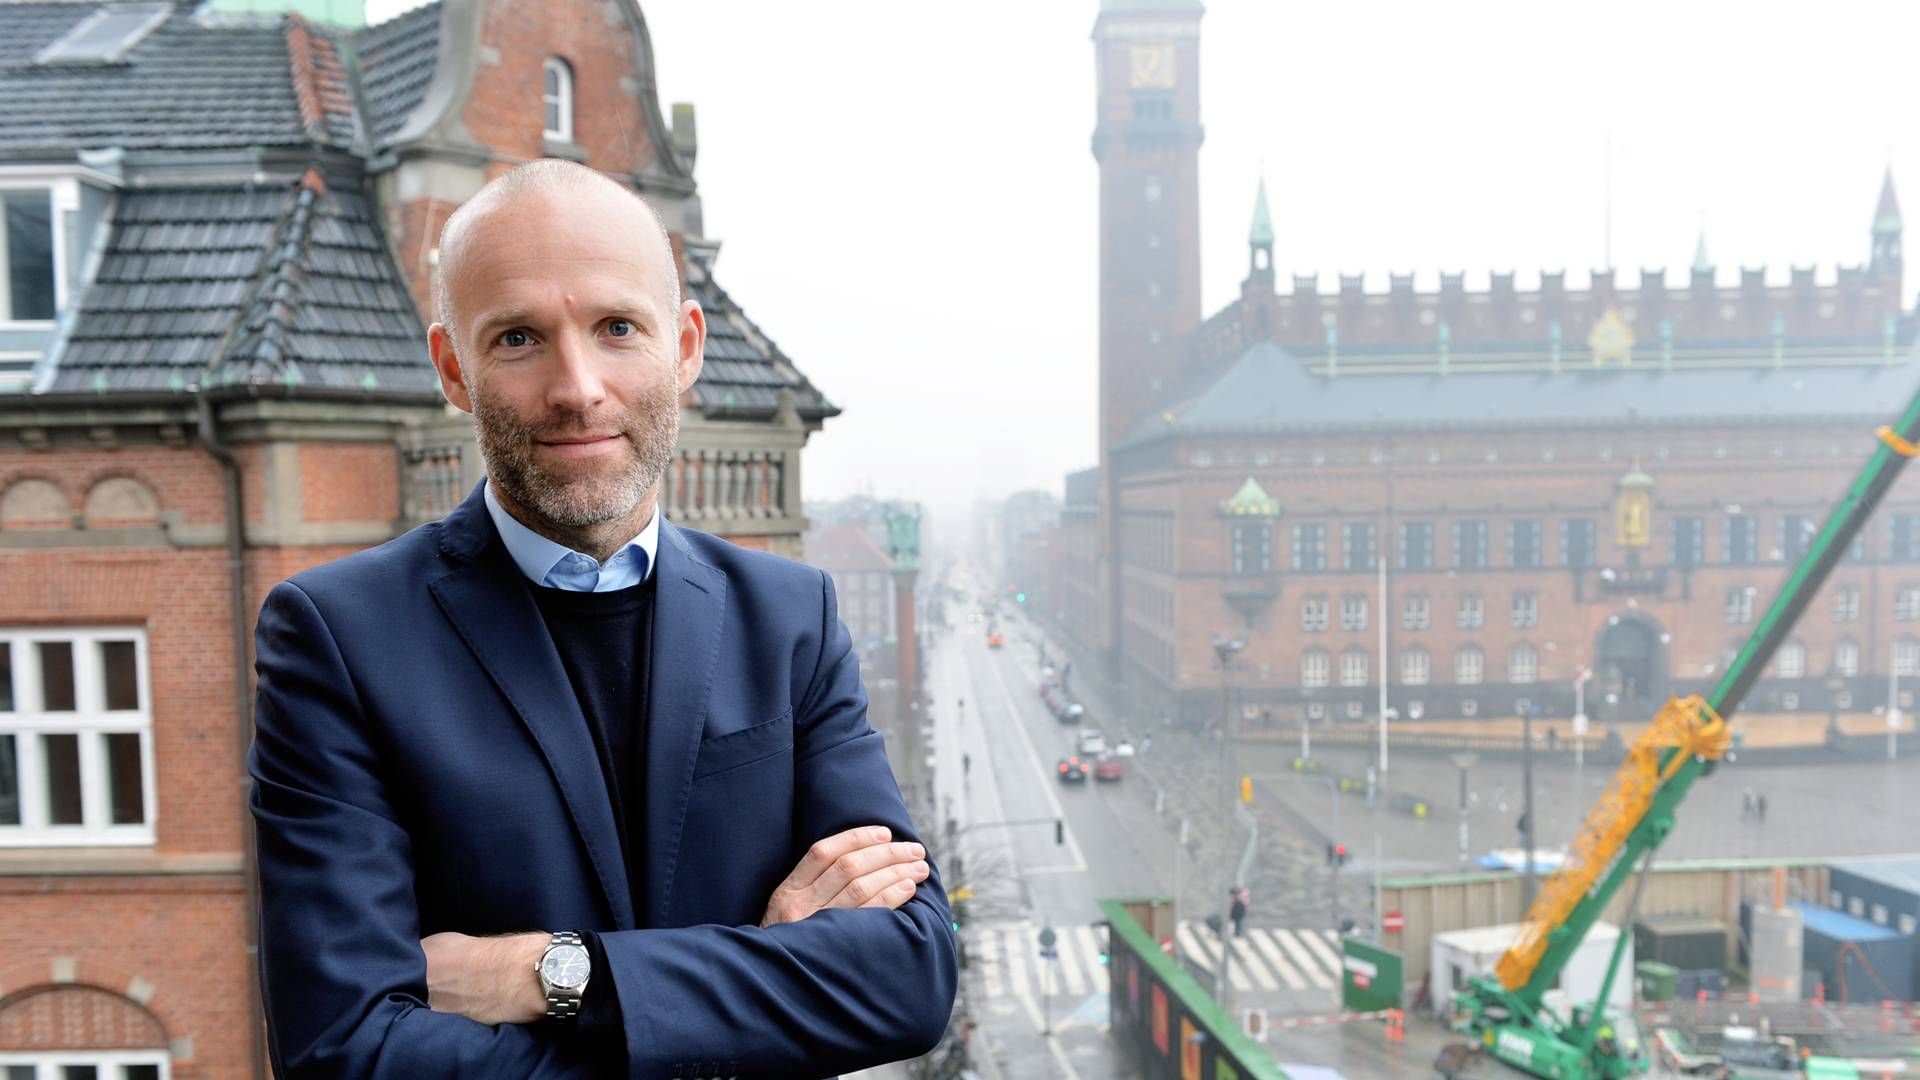 Adm. direktør i JP/Politikens Hus, Stig Ørskov. | Foto: Mik Eskestad/ERH